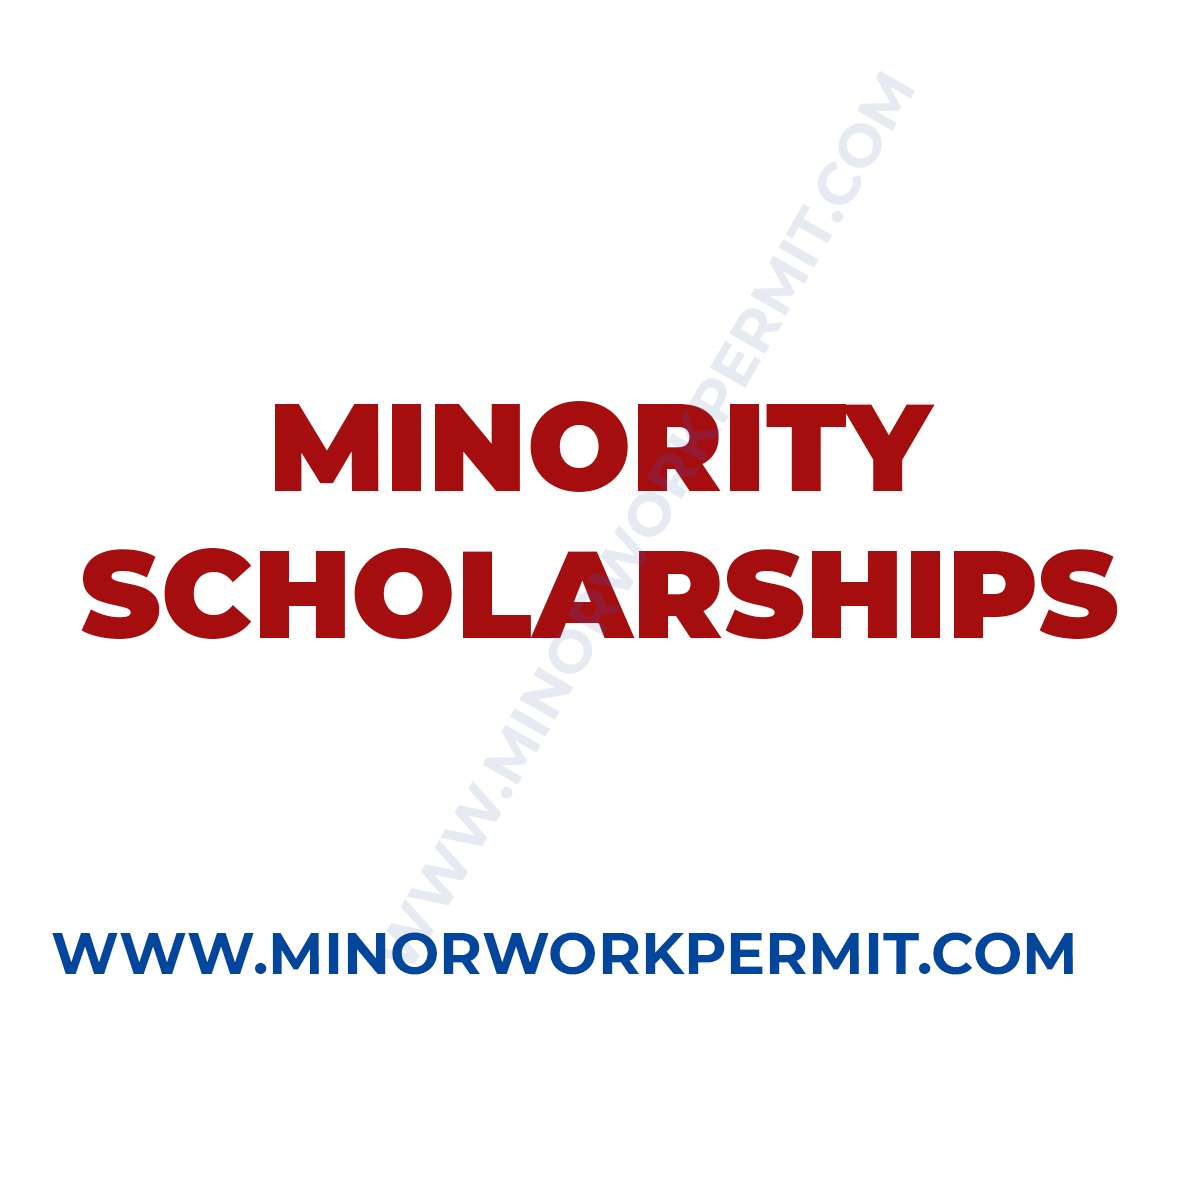 Minority scholarships